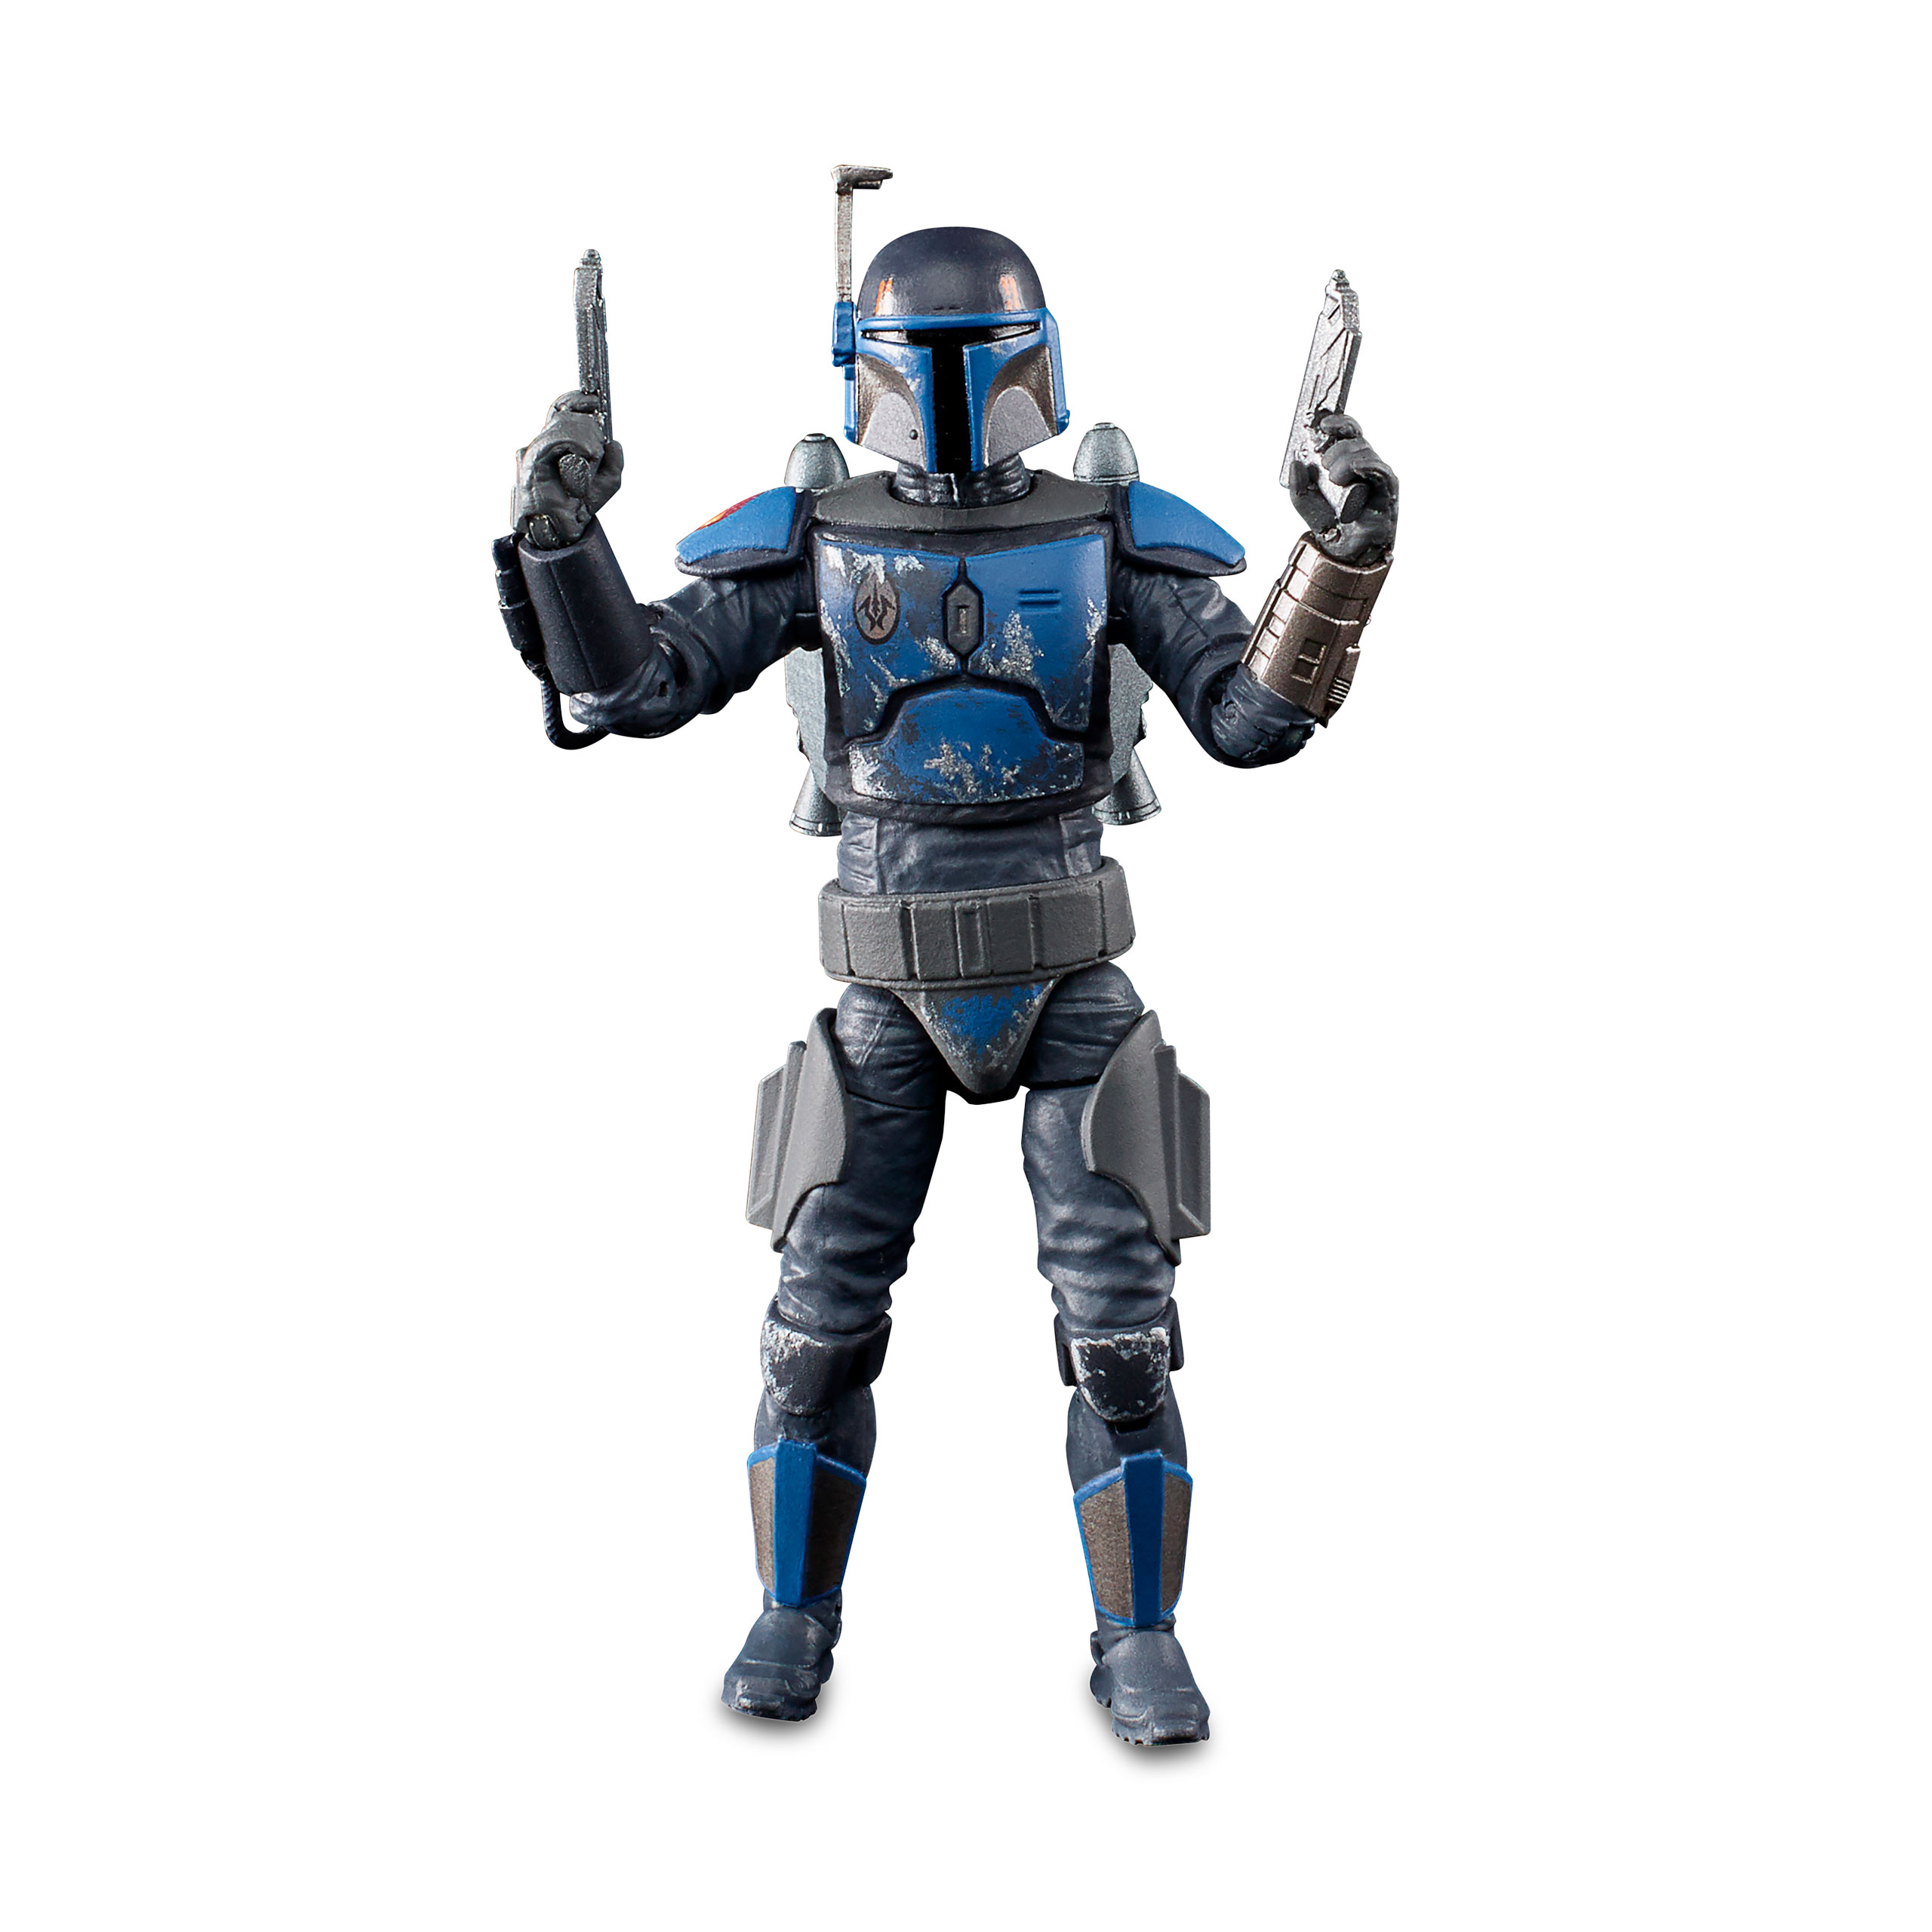 Mandalorian Death Watch Airborne Trooper Action Figure - Star Wars The Mandalorian